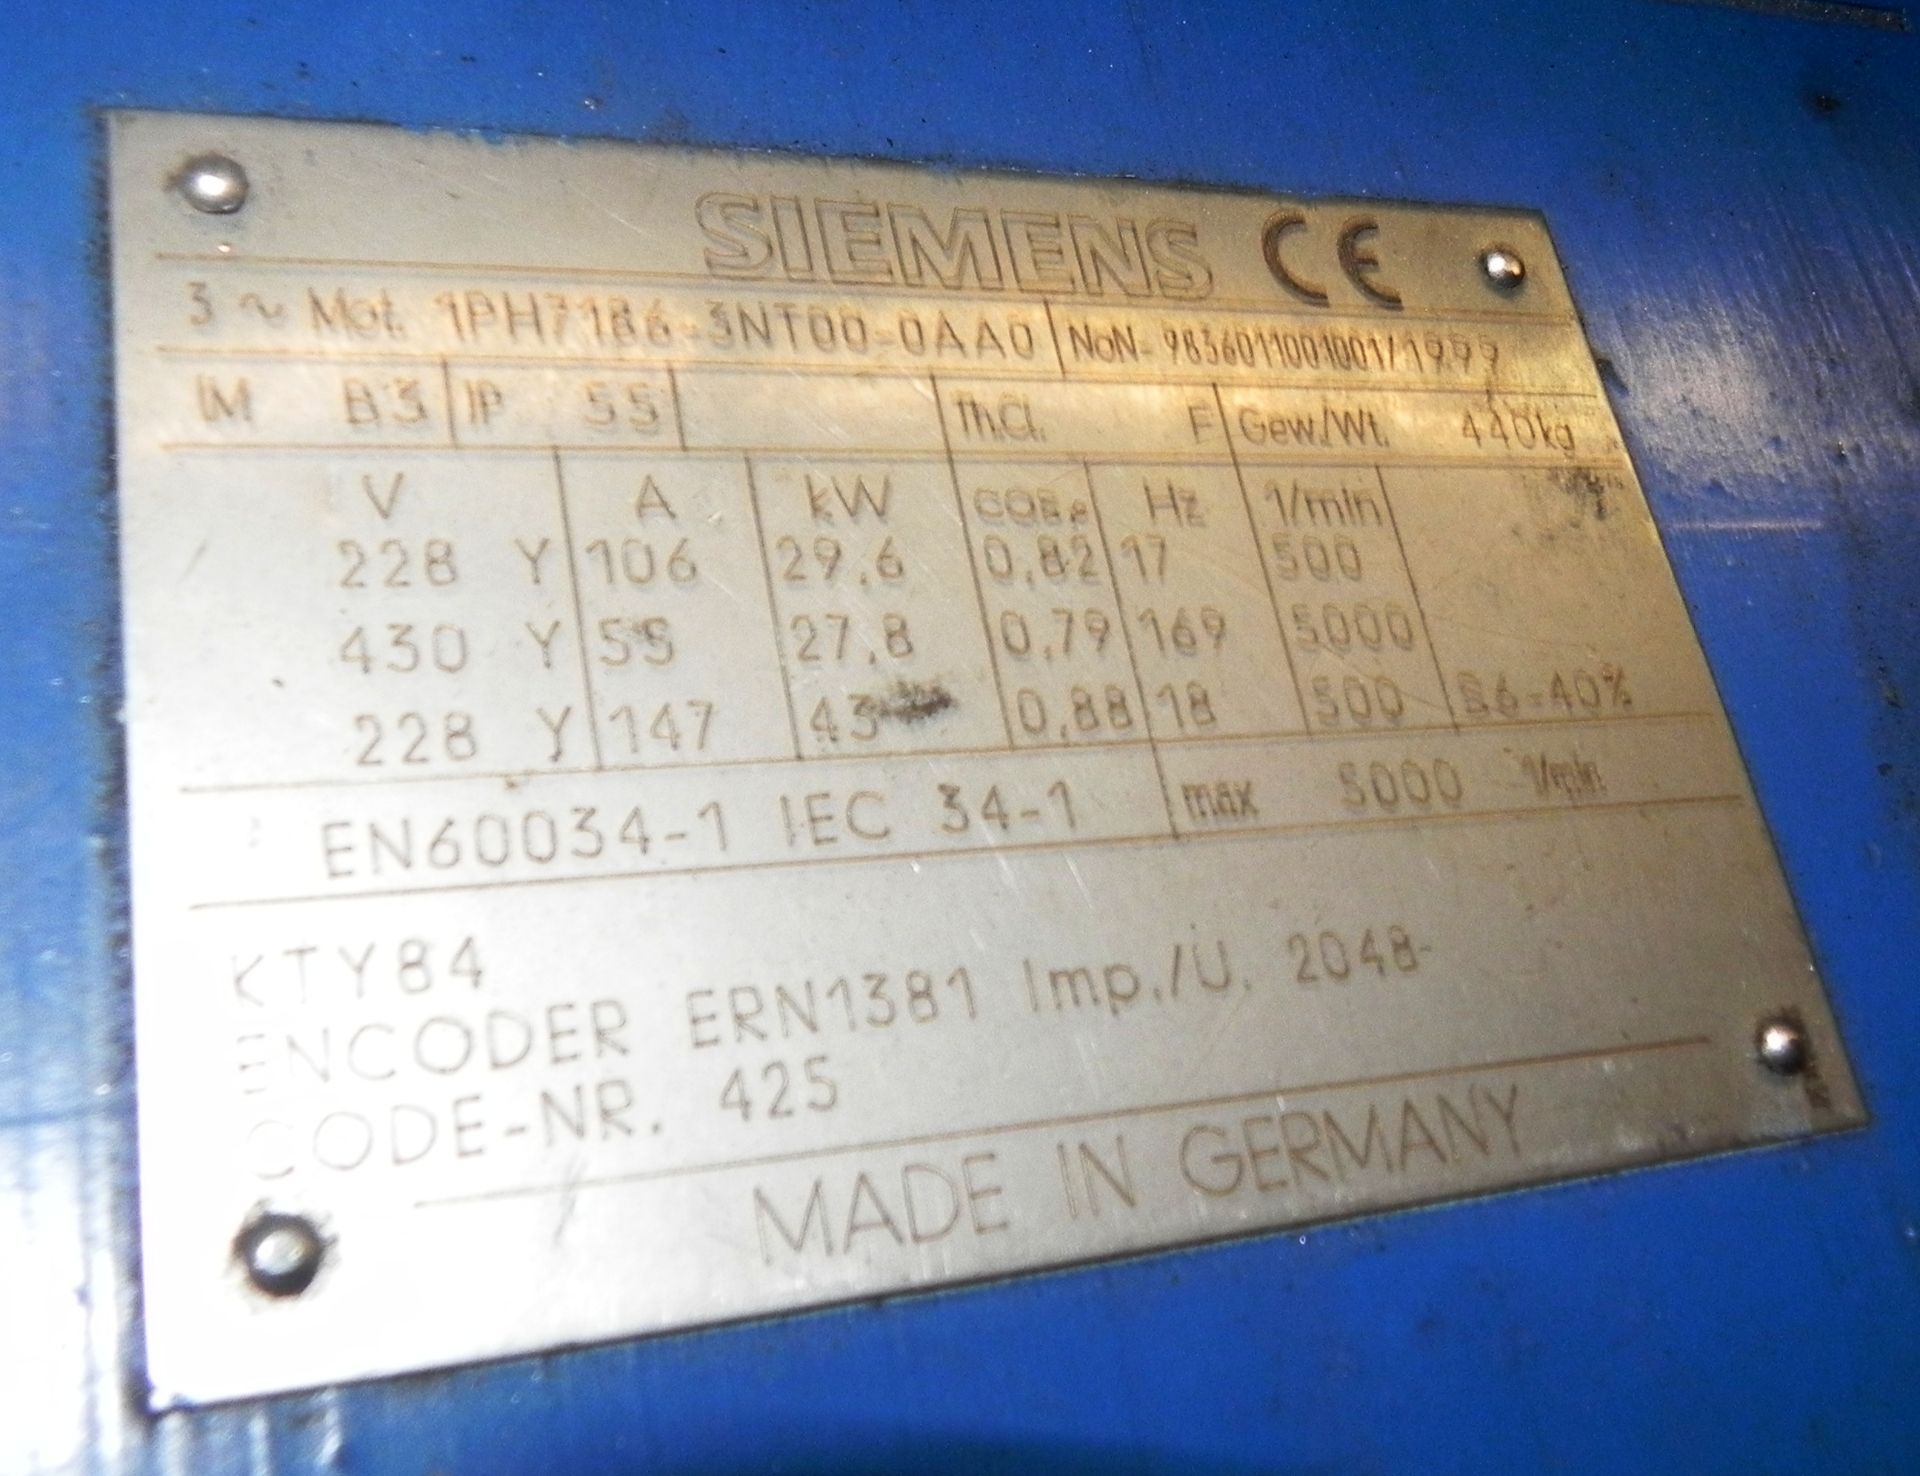 Siemens 43KW Servo Motor 1PH7186-3NT00-0AA0 - Image 2 of 3